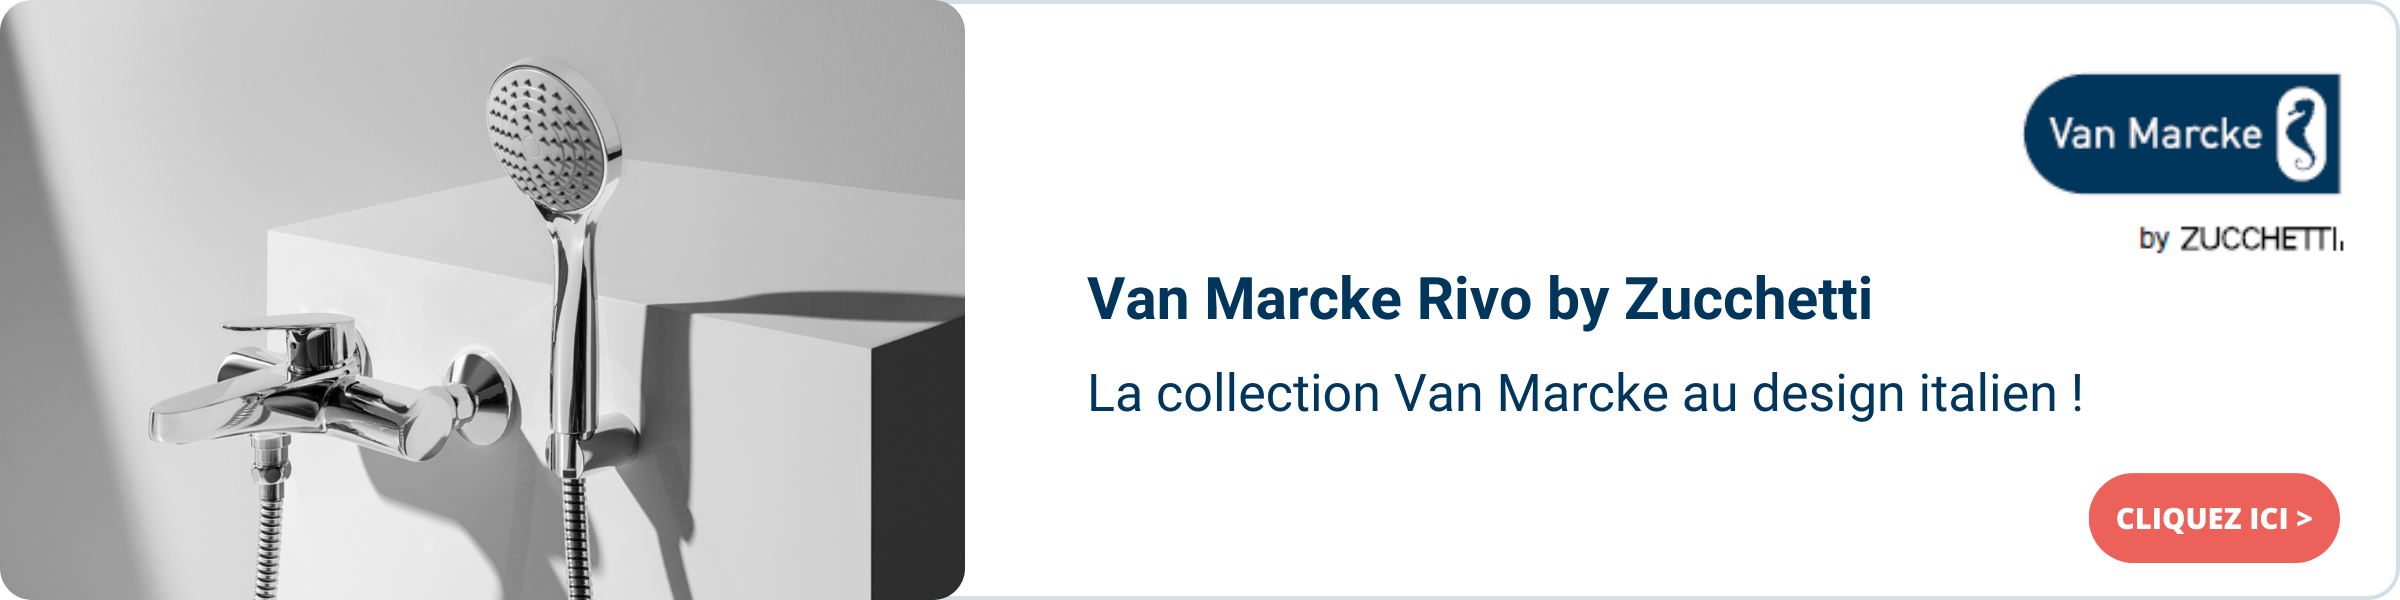 Van Marcke Rivo by Zucchetti - FR.png